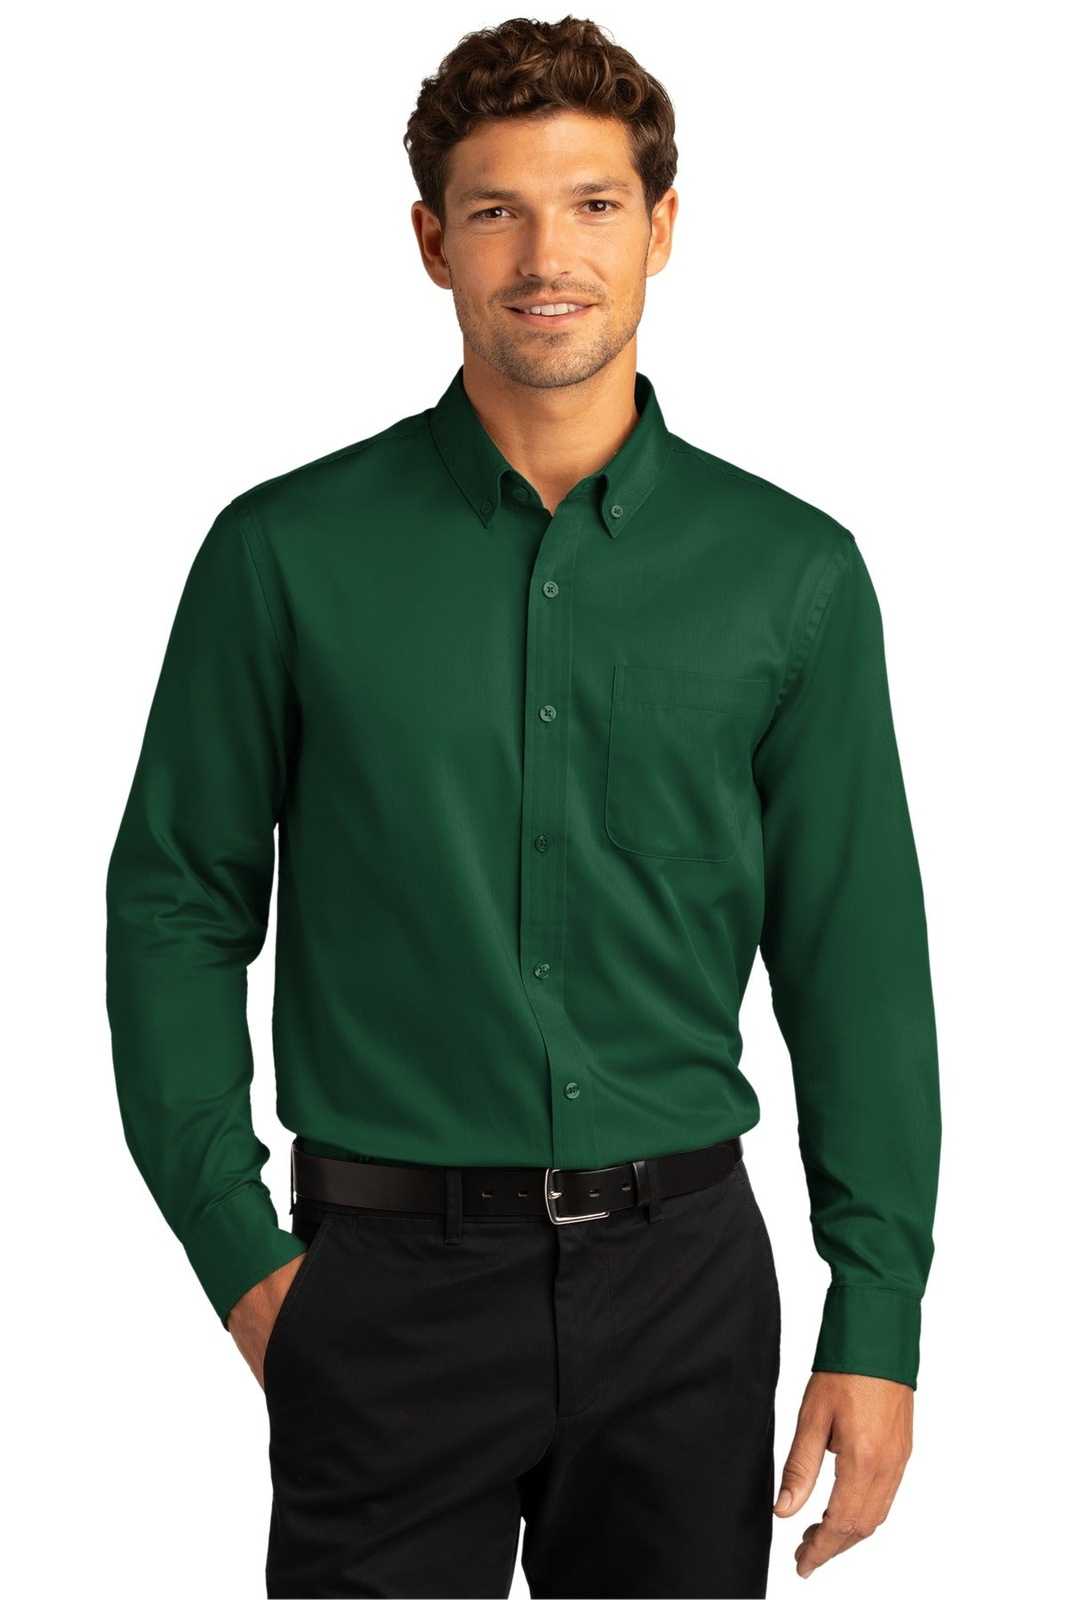 Port Authority W808 Long Sleeve SuperPro React Twill Shirt - Dark Green - HIT a Double - 1